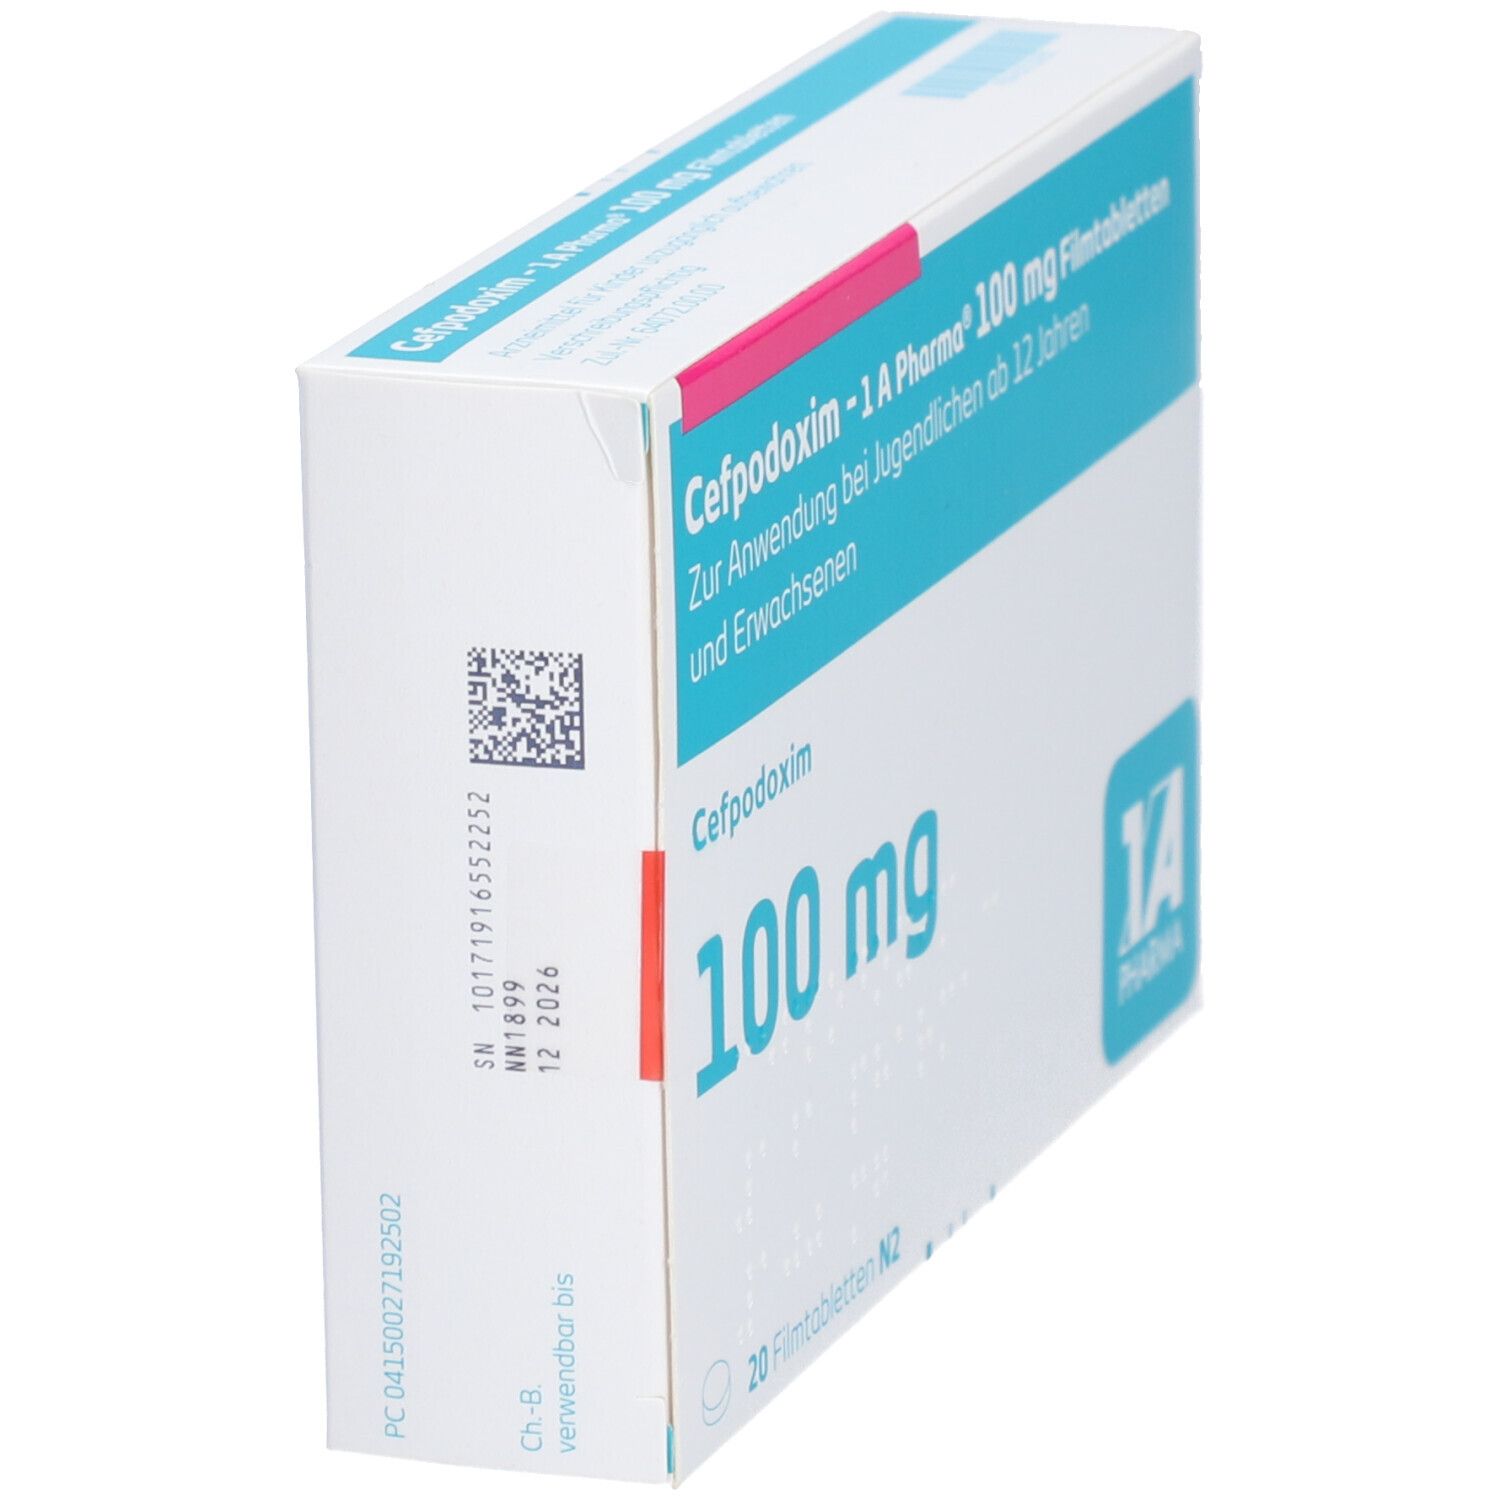 Cefpodoxim 1A Pharma® 100Mg